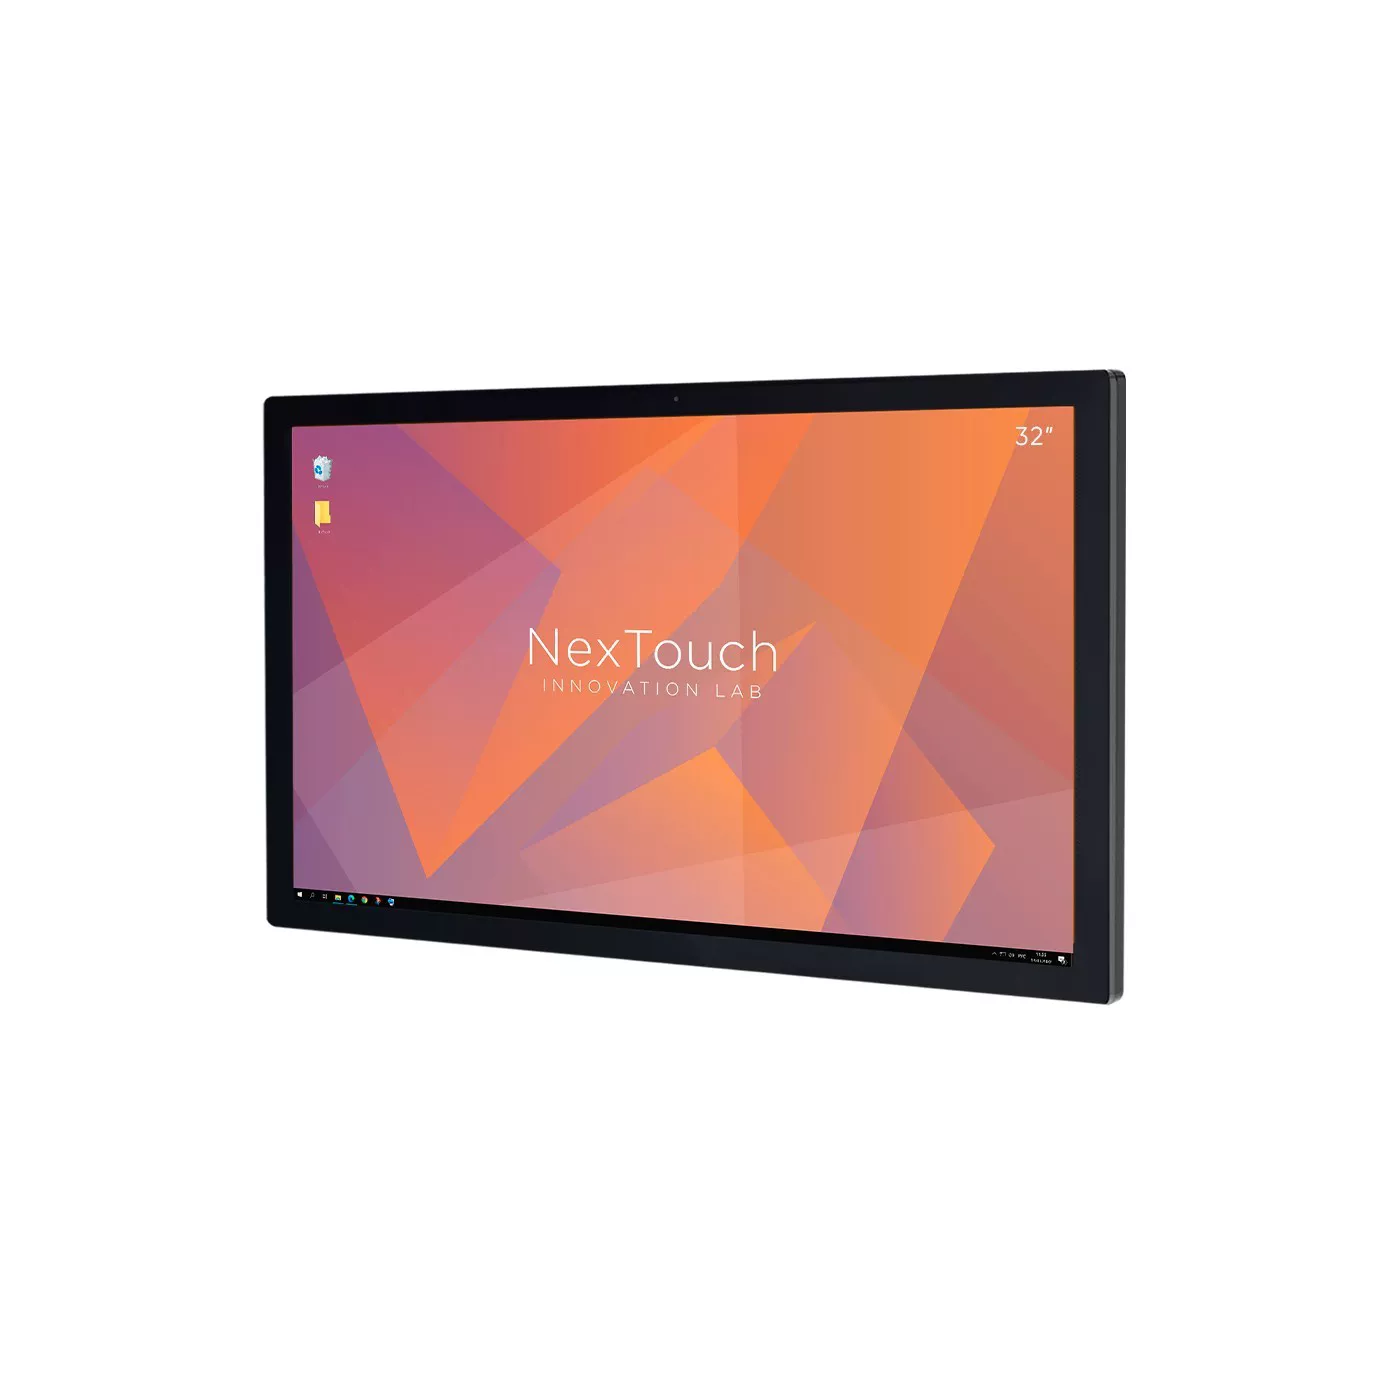 Комплекс NexTouch NextPanel 32P интерактивный